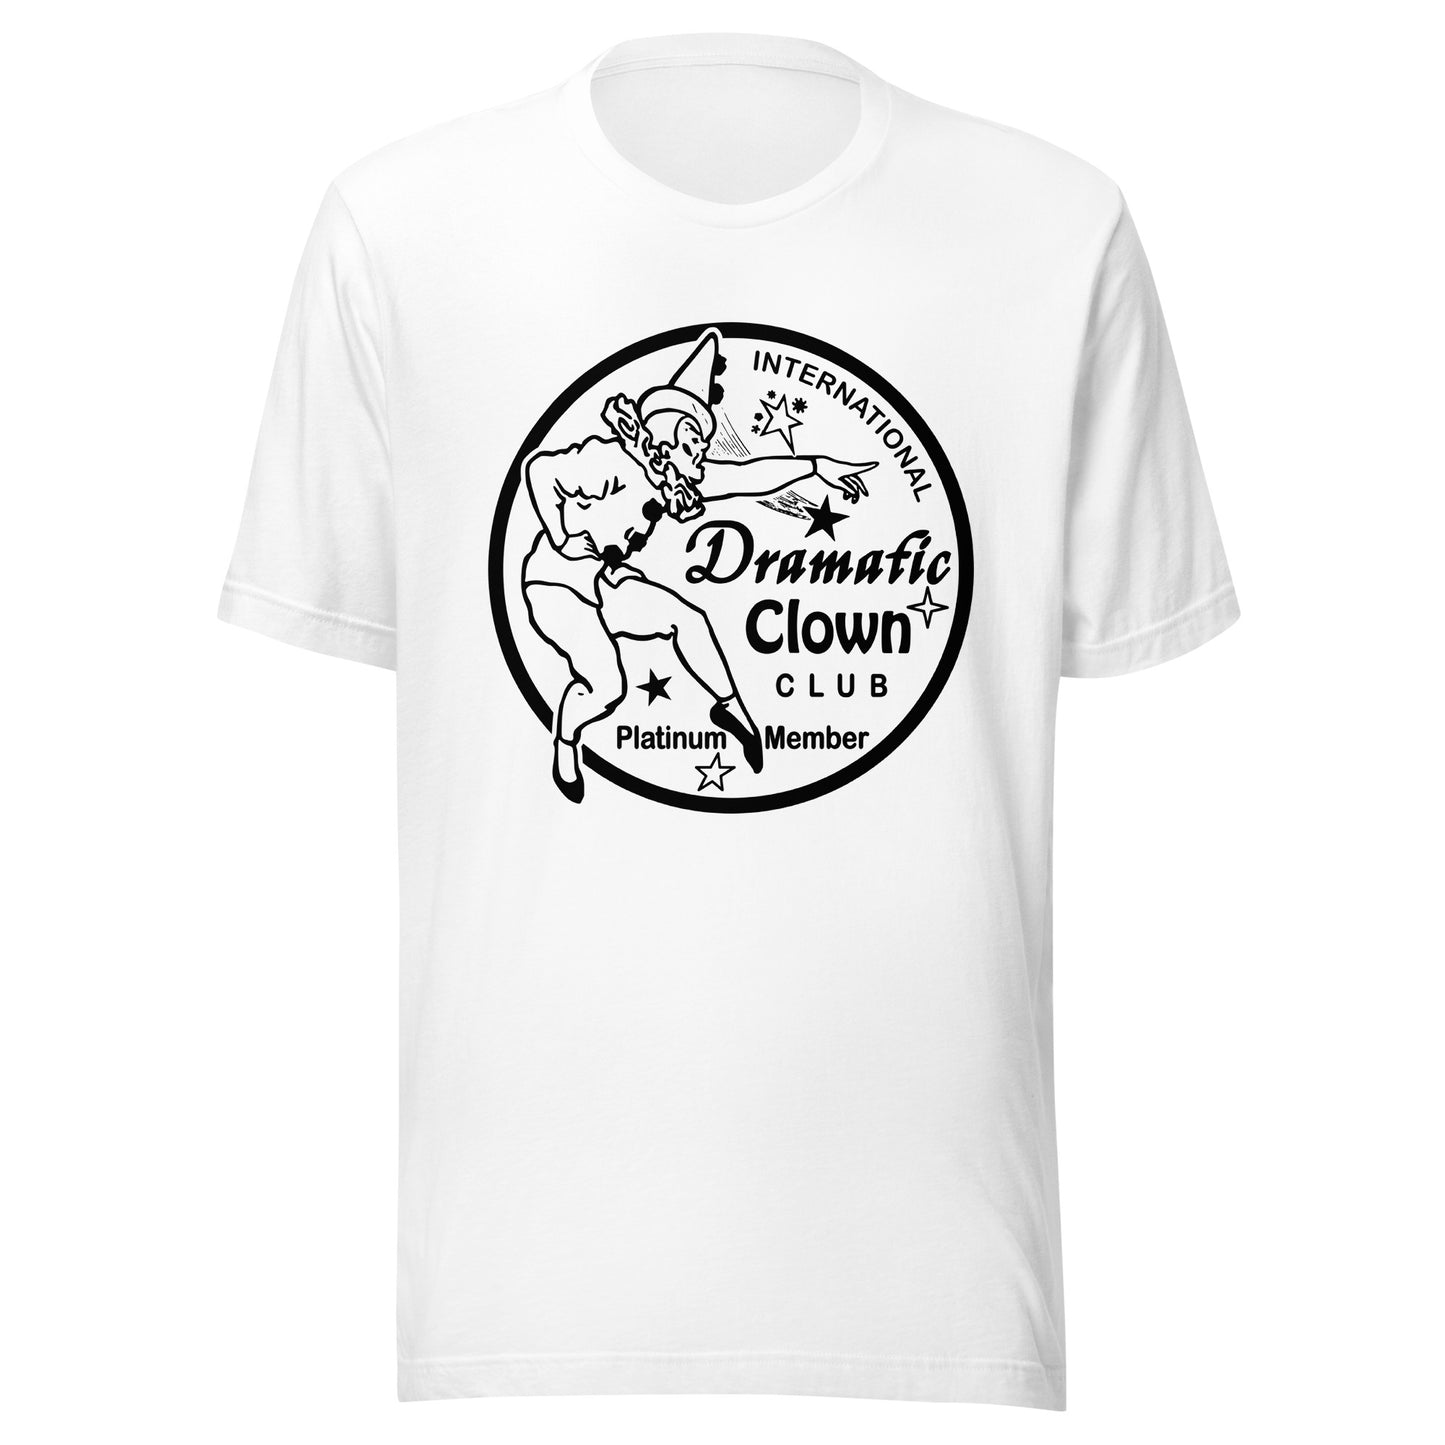 "Dramatic Clown Club" Unisex t-shirt